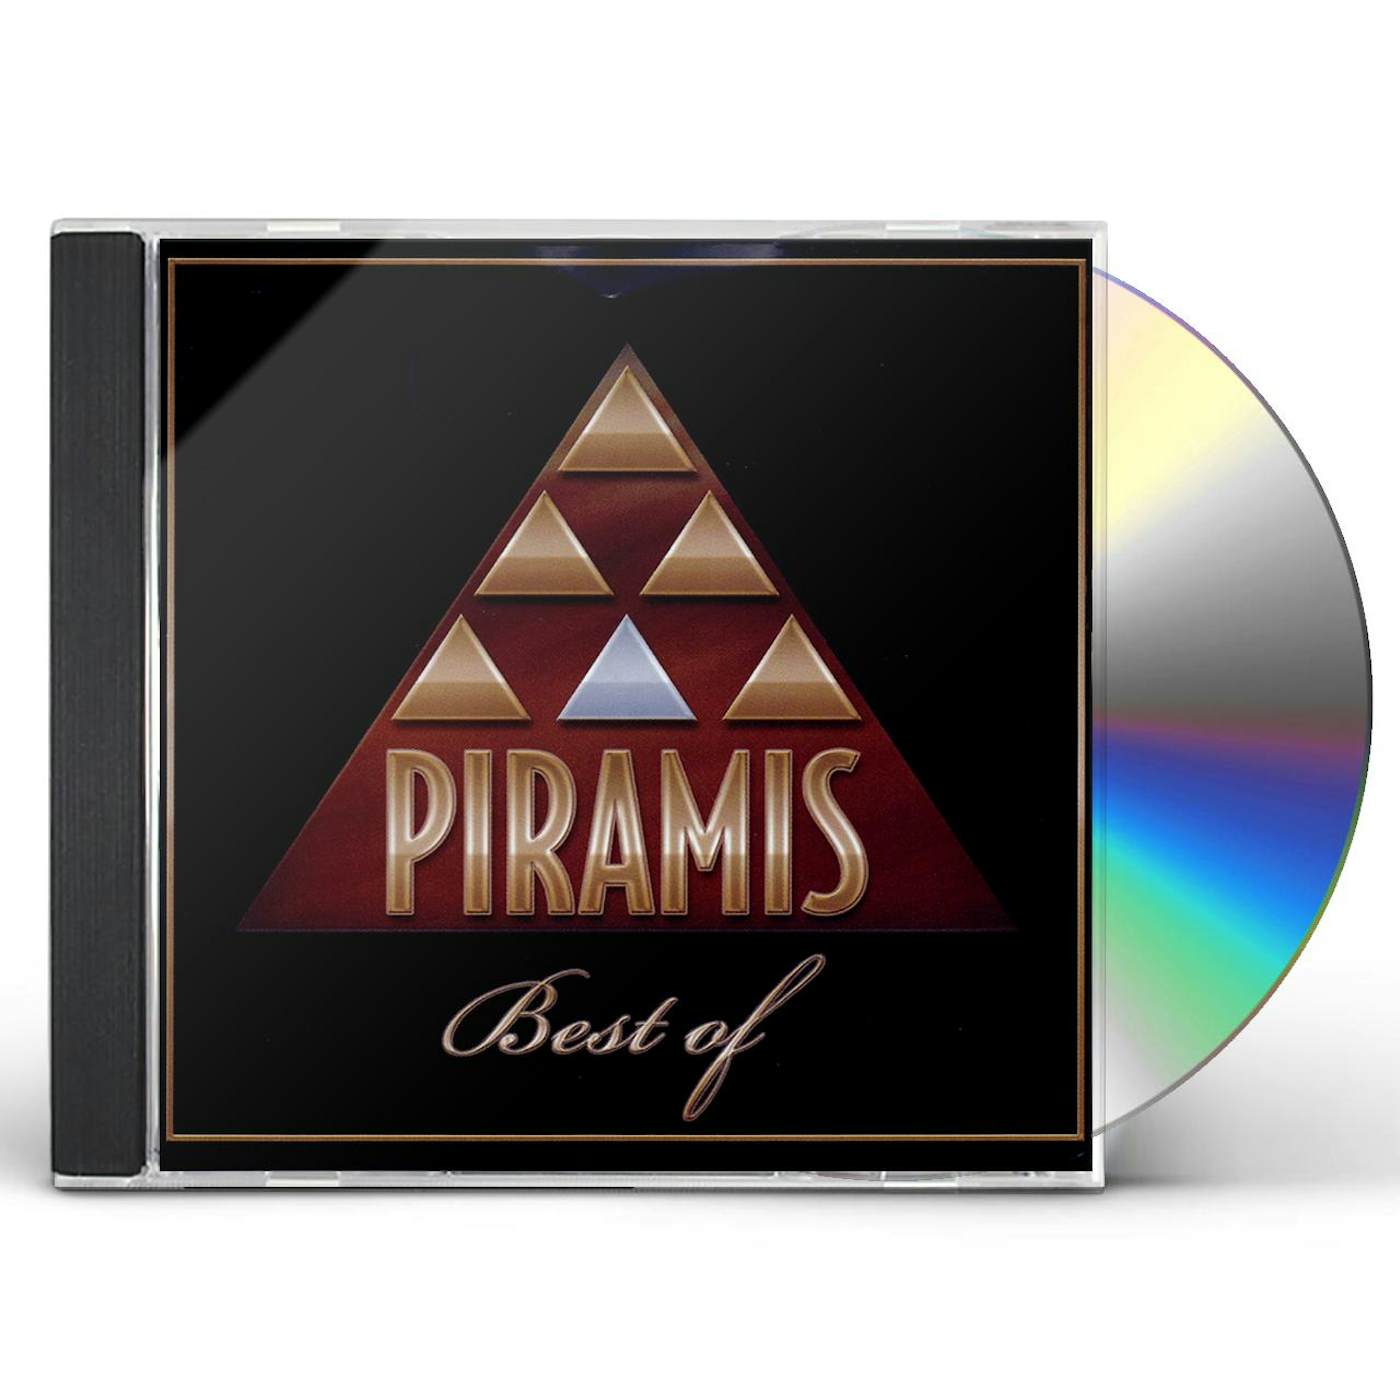 BEST OF PIRAMIS 1975-1981 CD